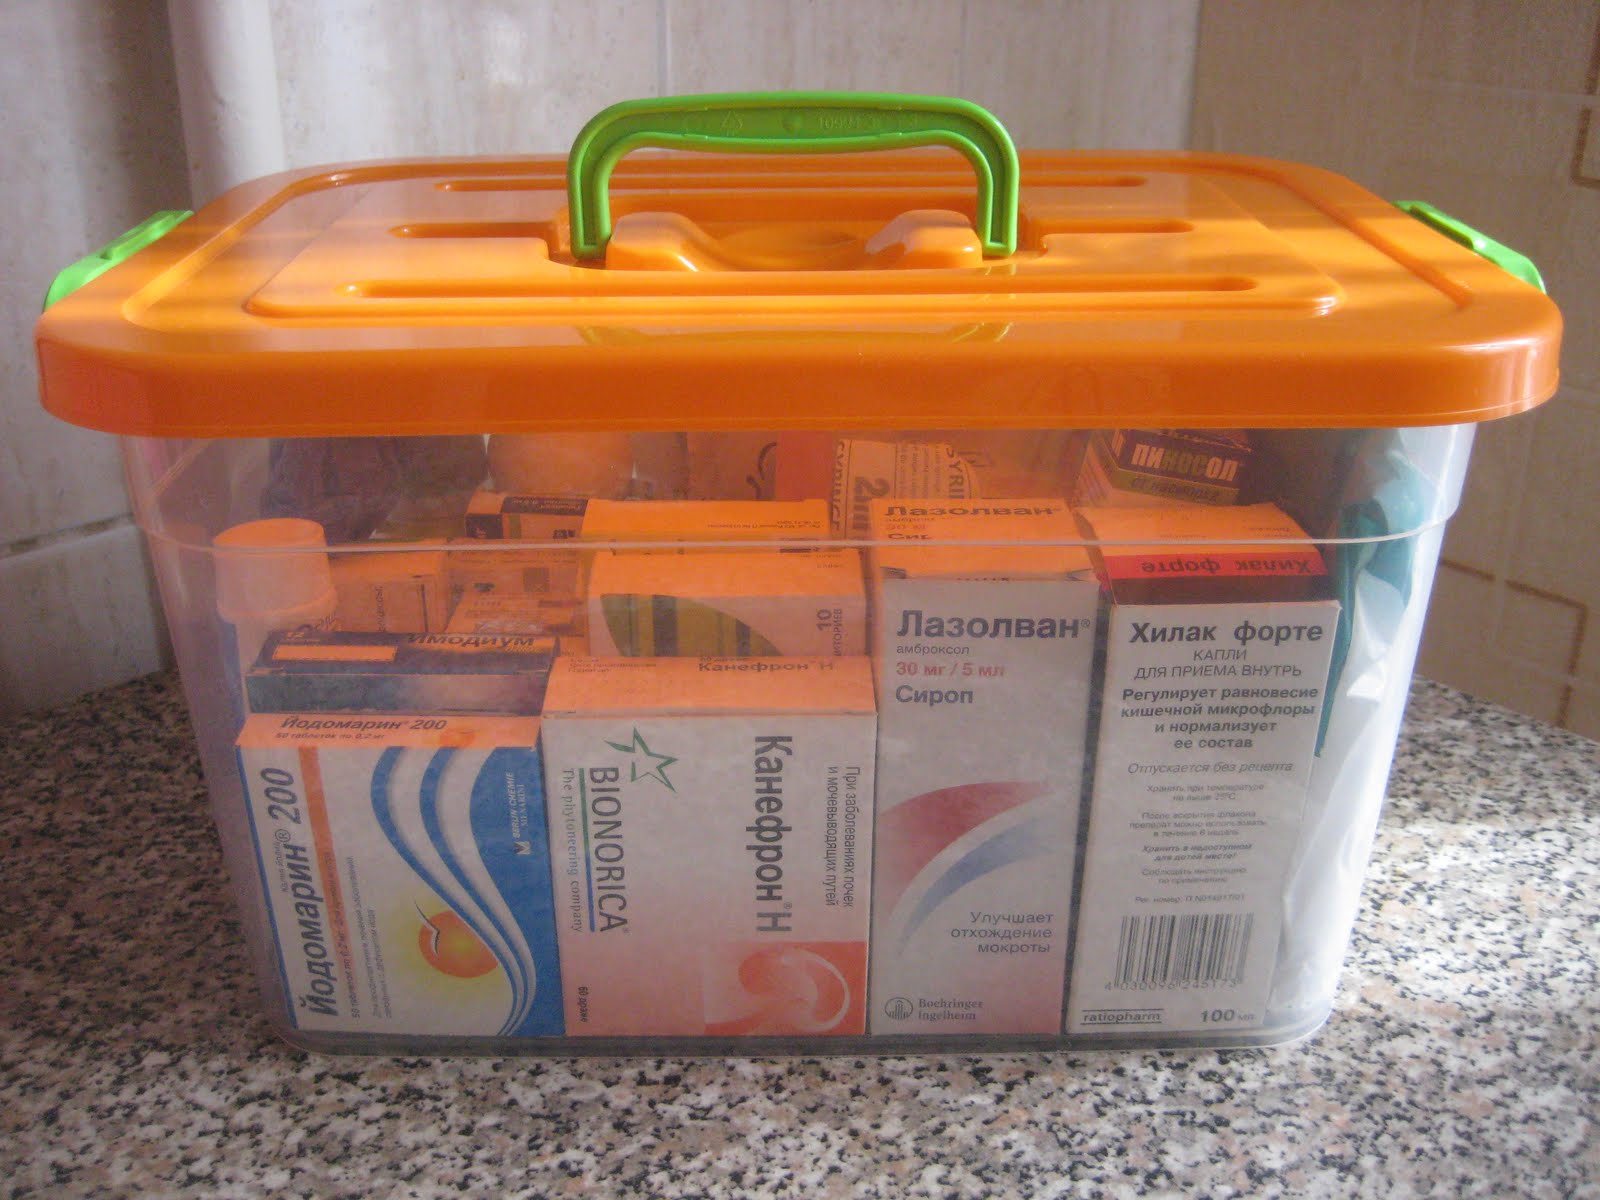 Хранение лекарств в коробке